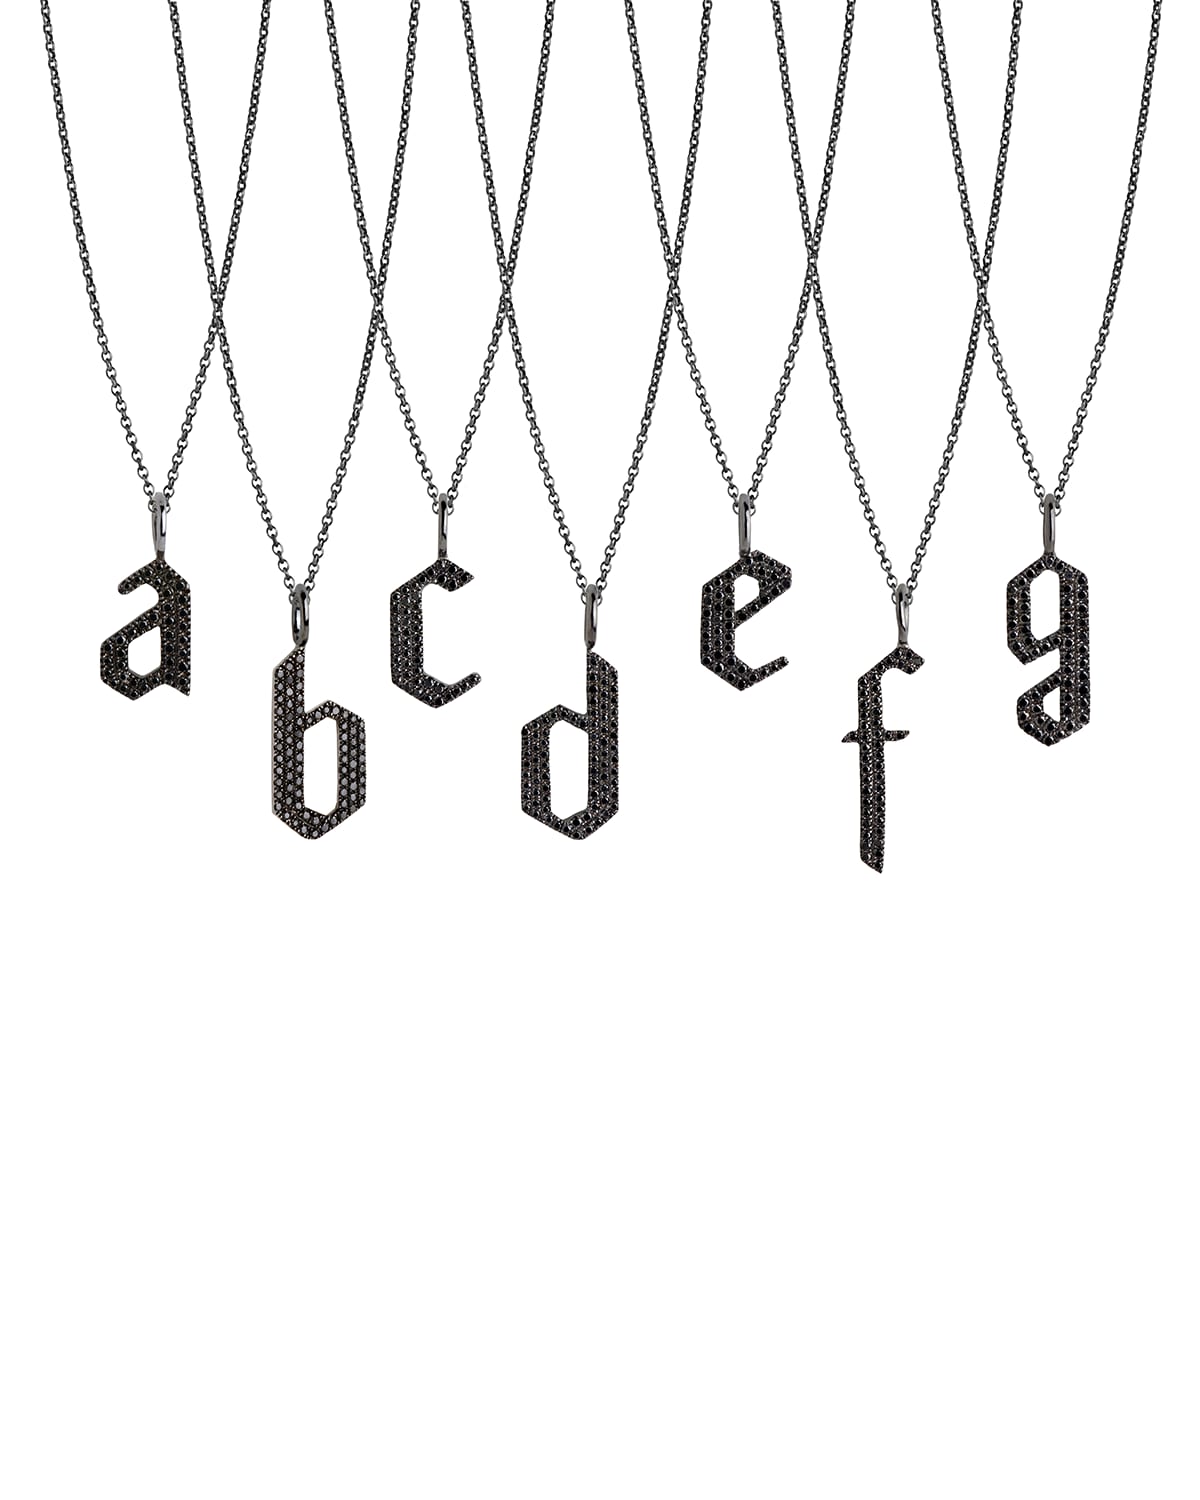 Bridget King Jewelry Black Diamond Alphabet Necklace